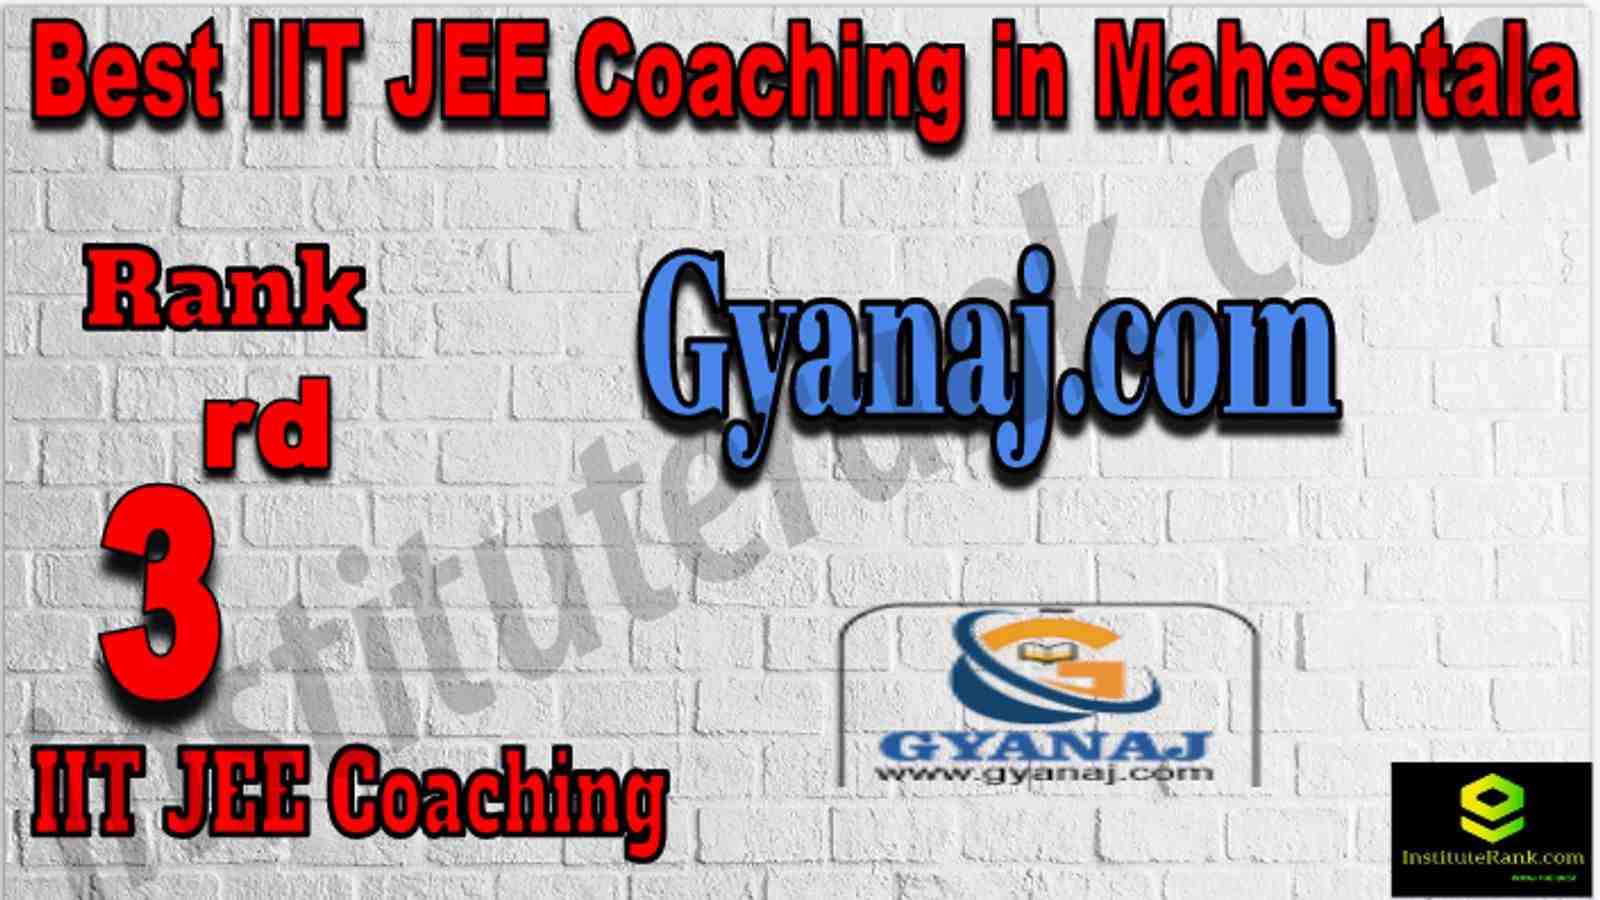 Rank 3rd Best IIT JEE Coaching in Maheshtala